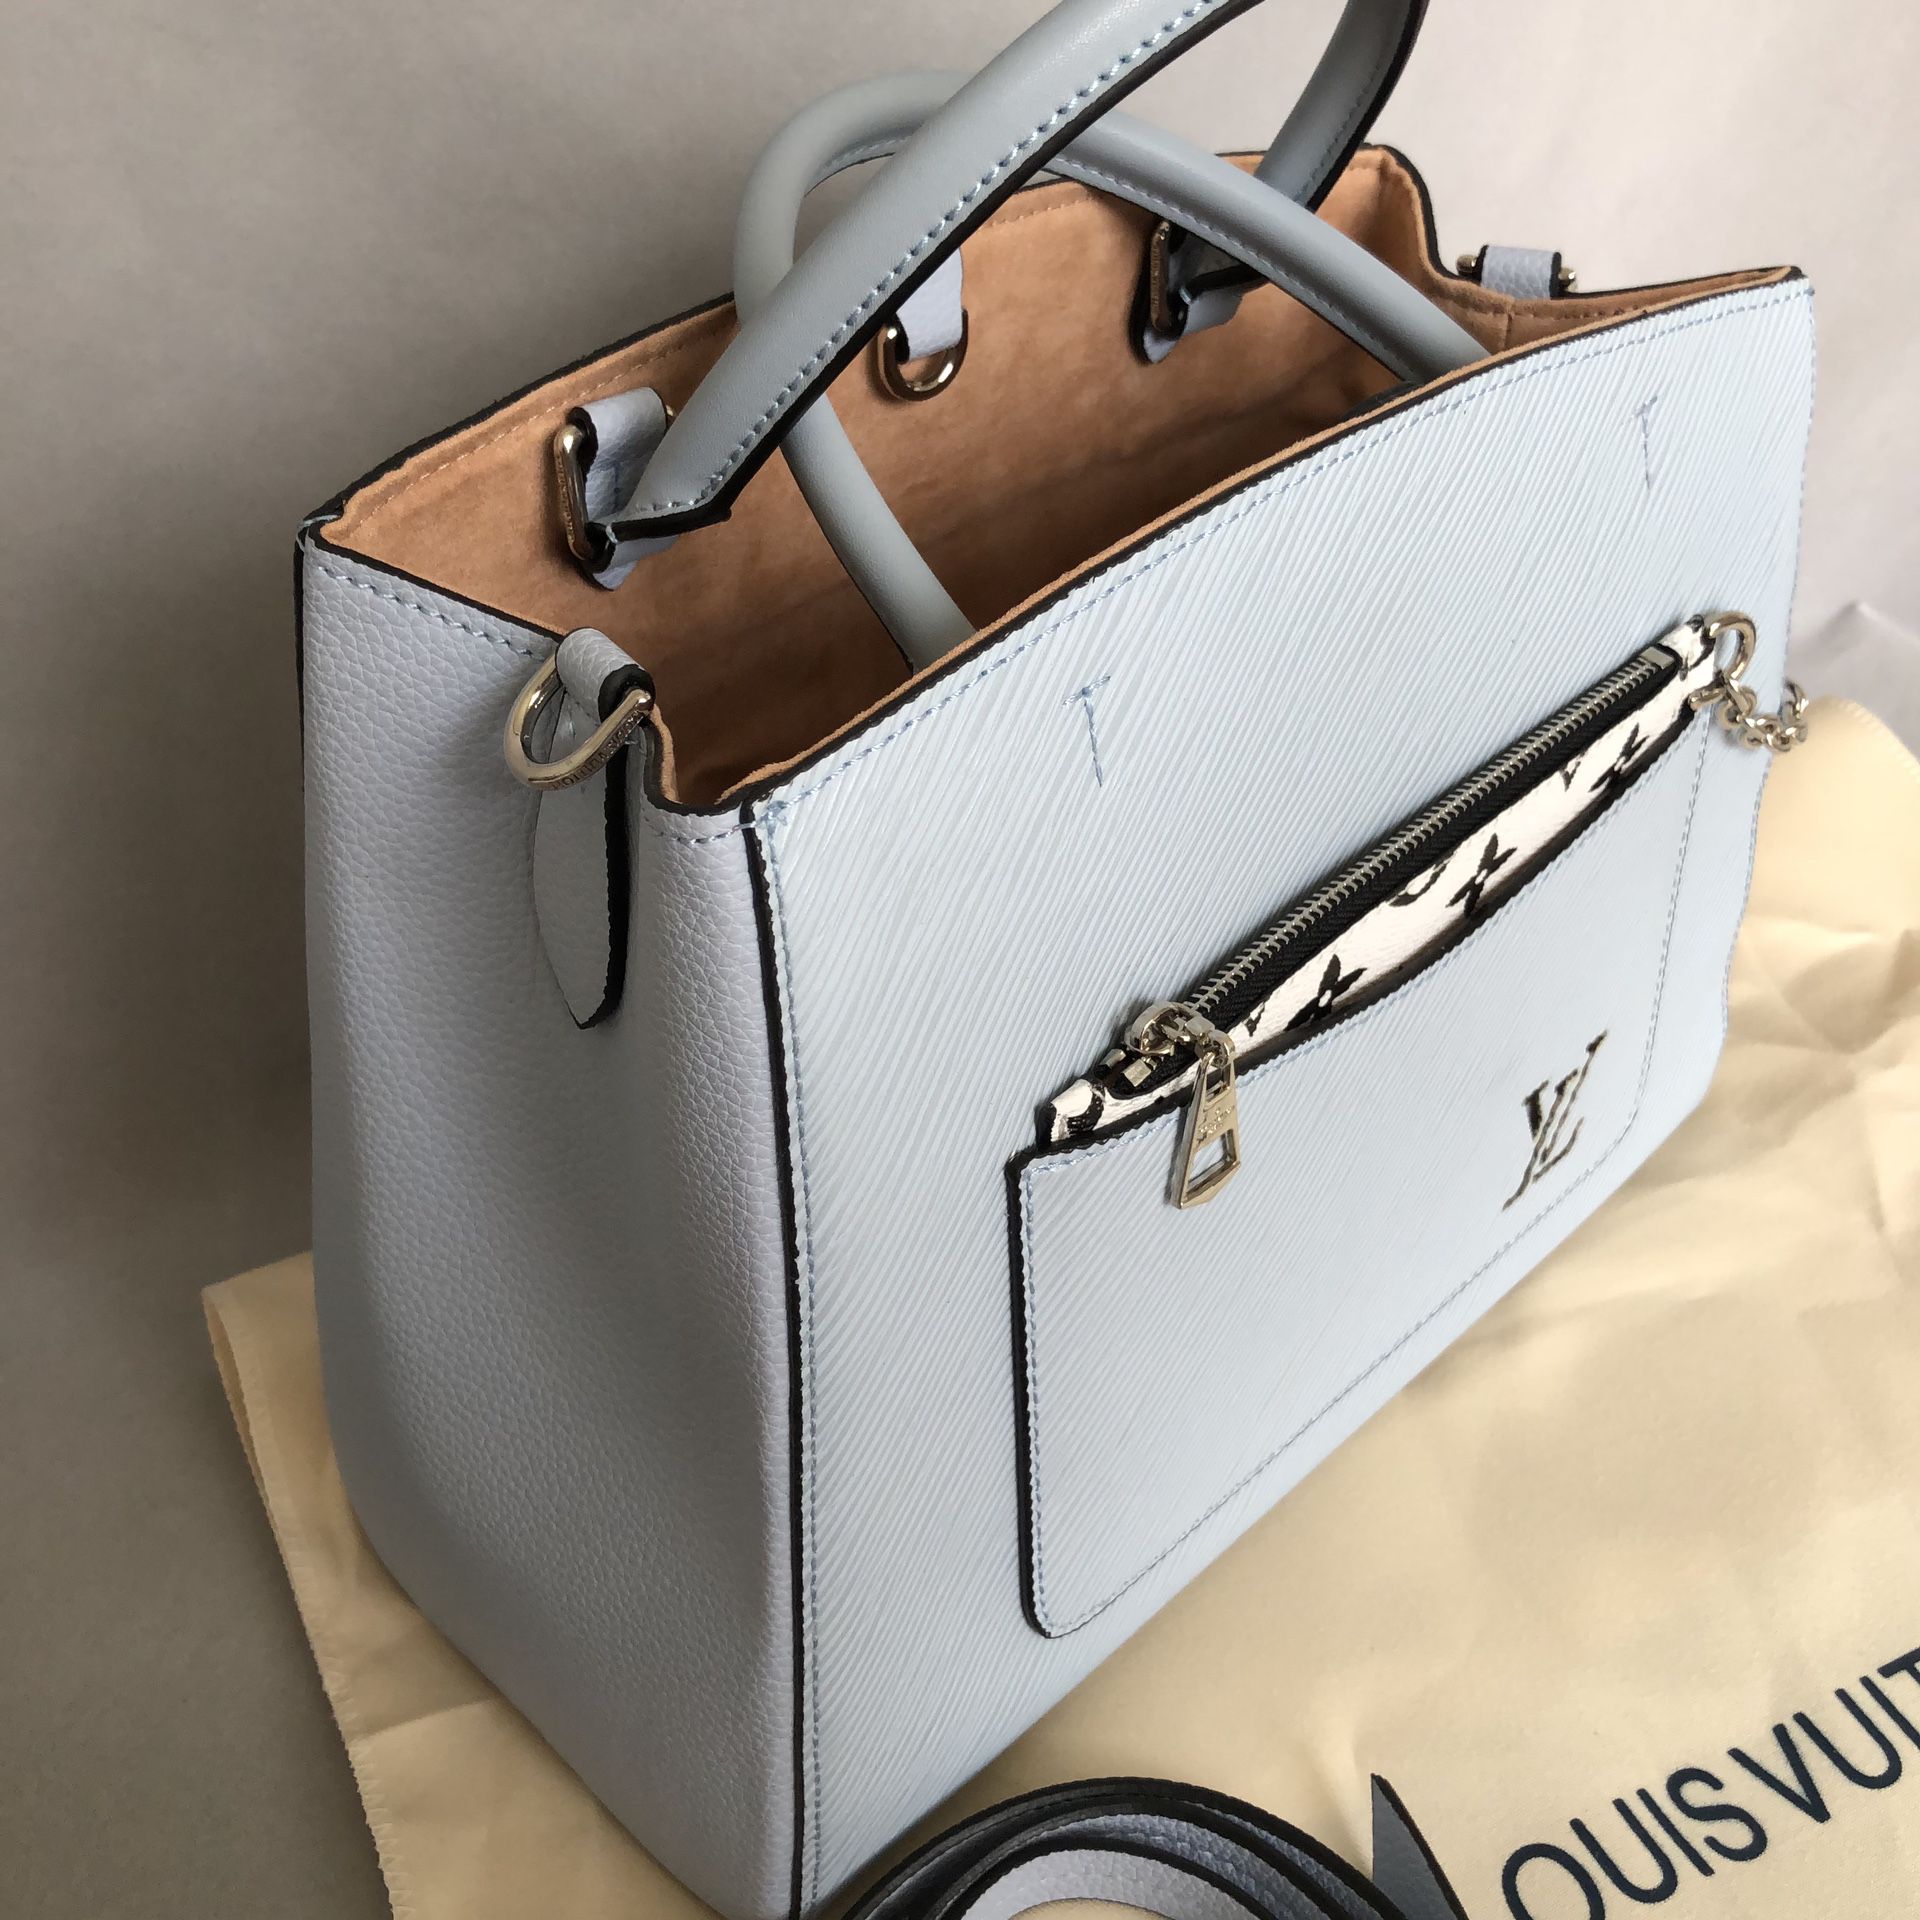 Louis Vuitton Marelle Tote BB Bag LV Epi Monogram Shopping Bag